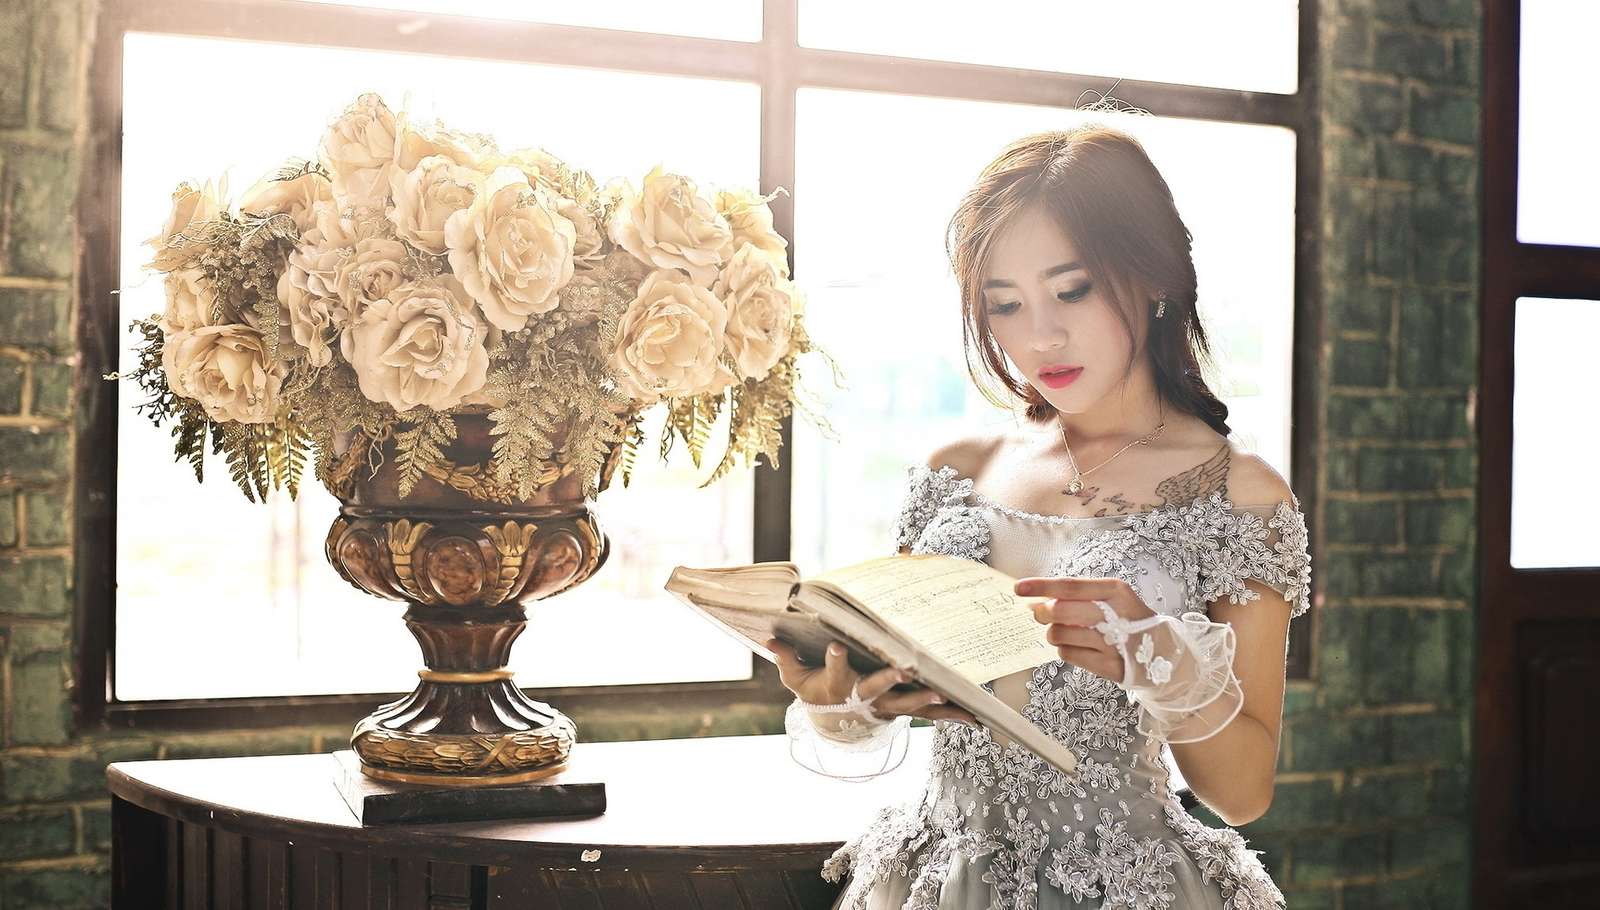 Donna con un libro accanto alle rose in un vaso vicino alla finestra puzzle online